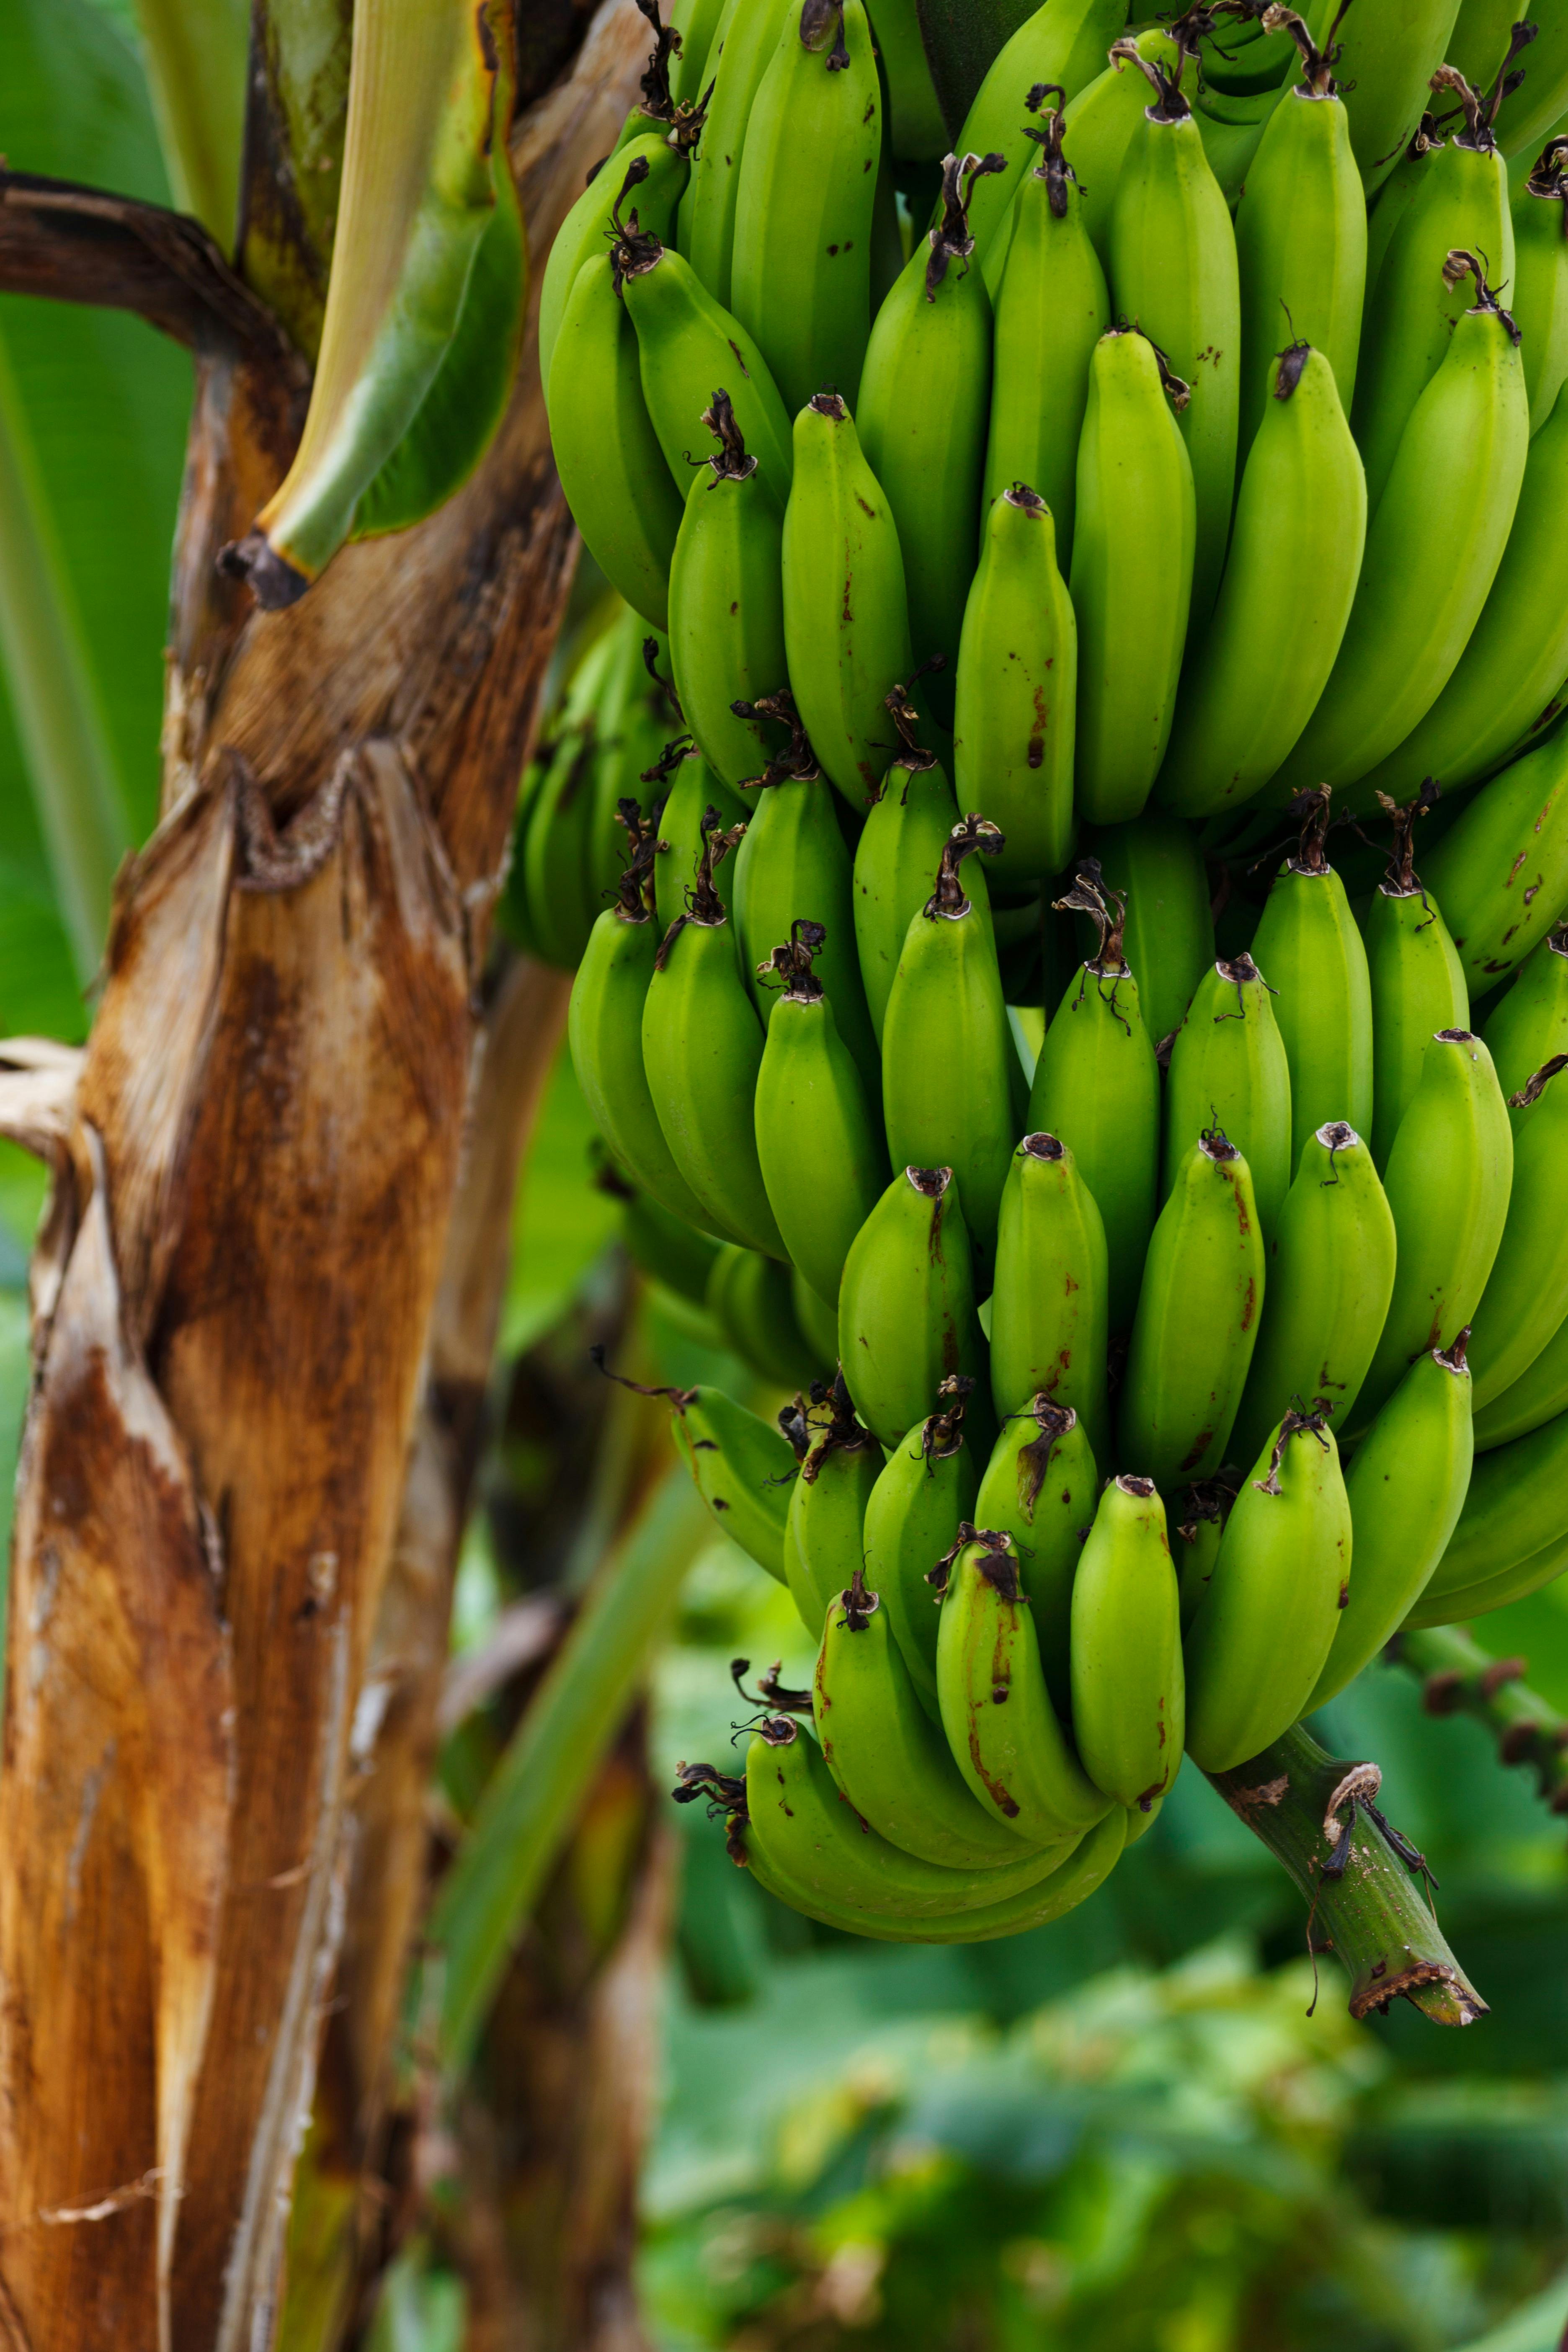 Kostenloses Foto zum Thema: banane herz, bananen, bananenbaum